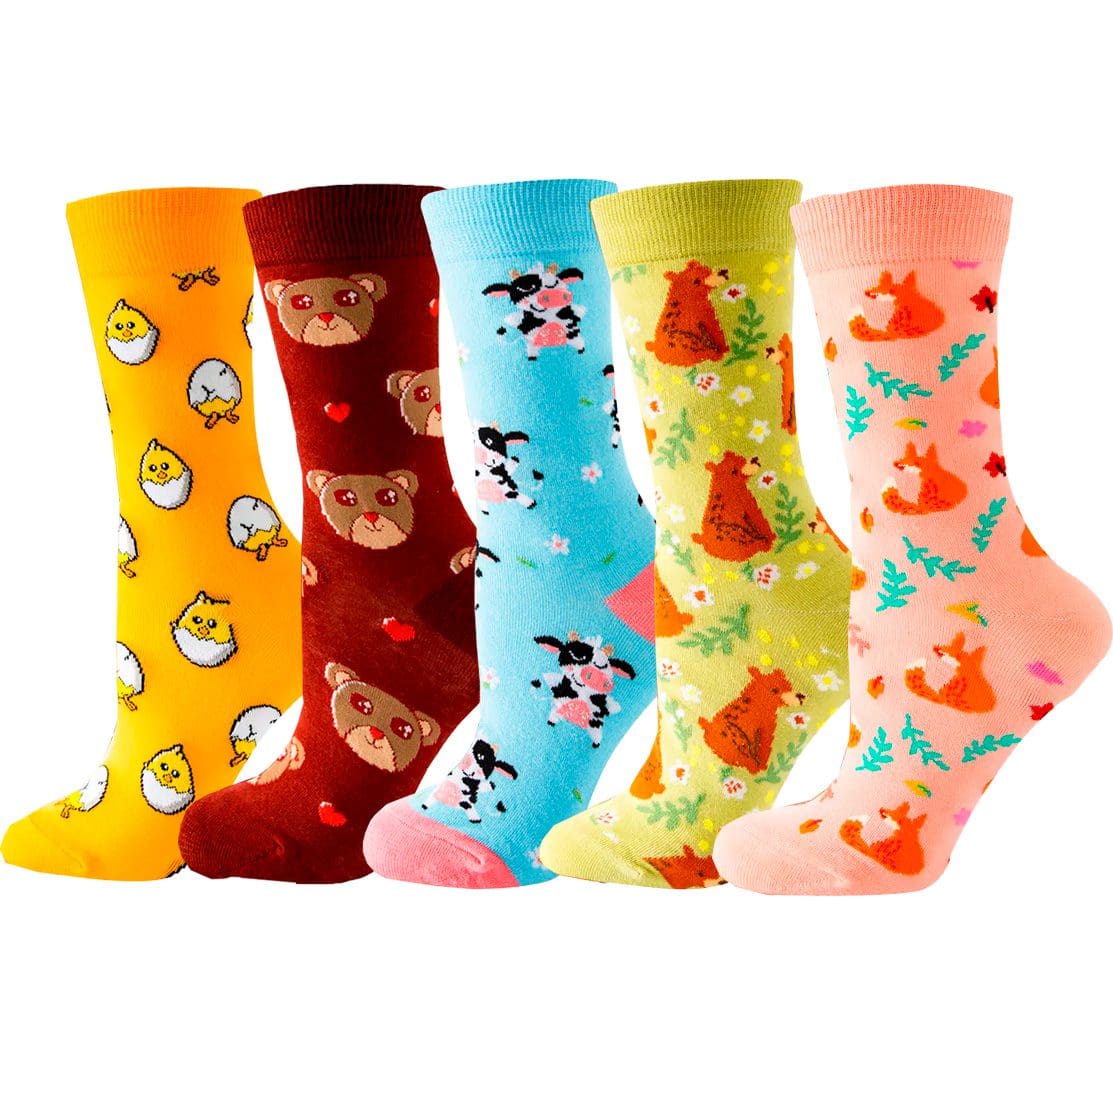 squid socks Hanukkah Collection Socks - Limited Edition!